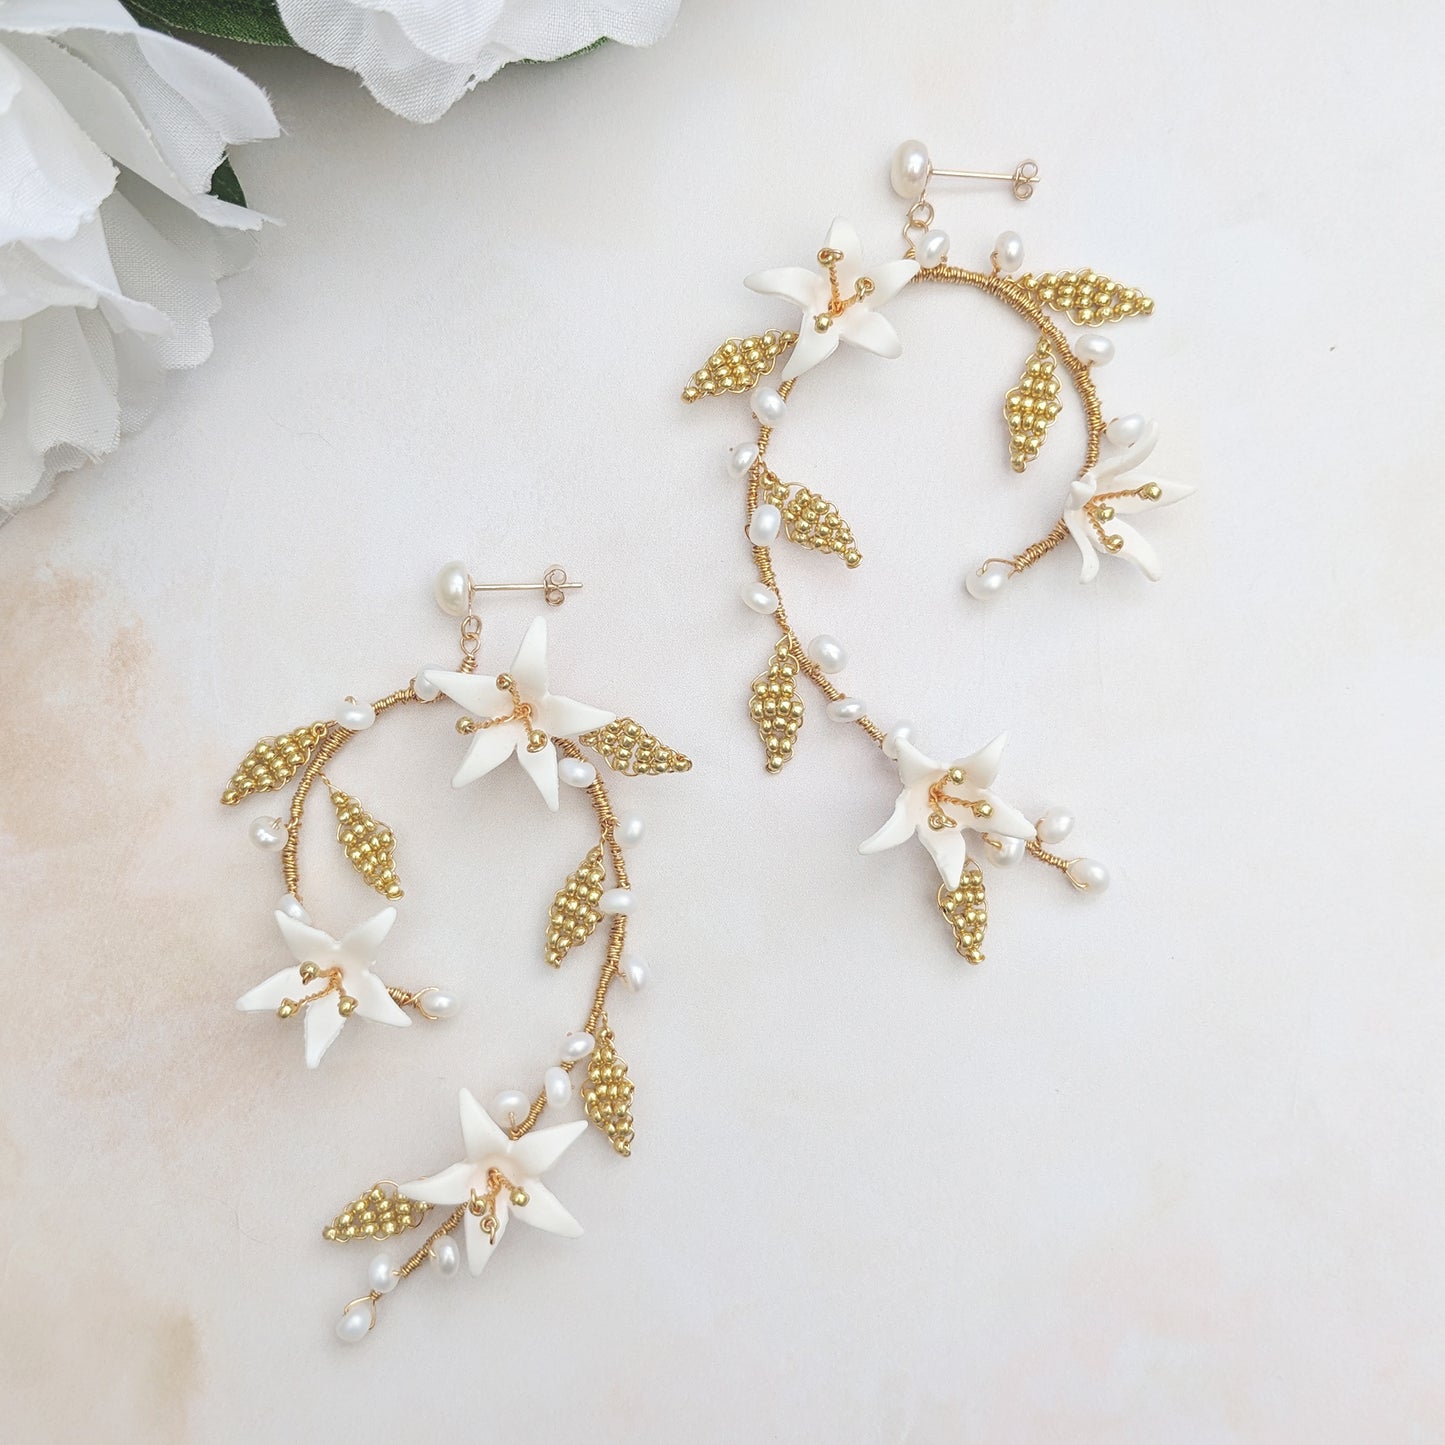 Statement floral wedding earrings for brides - Susie Warner